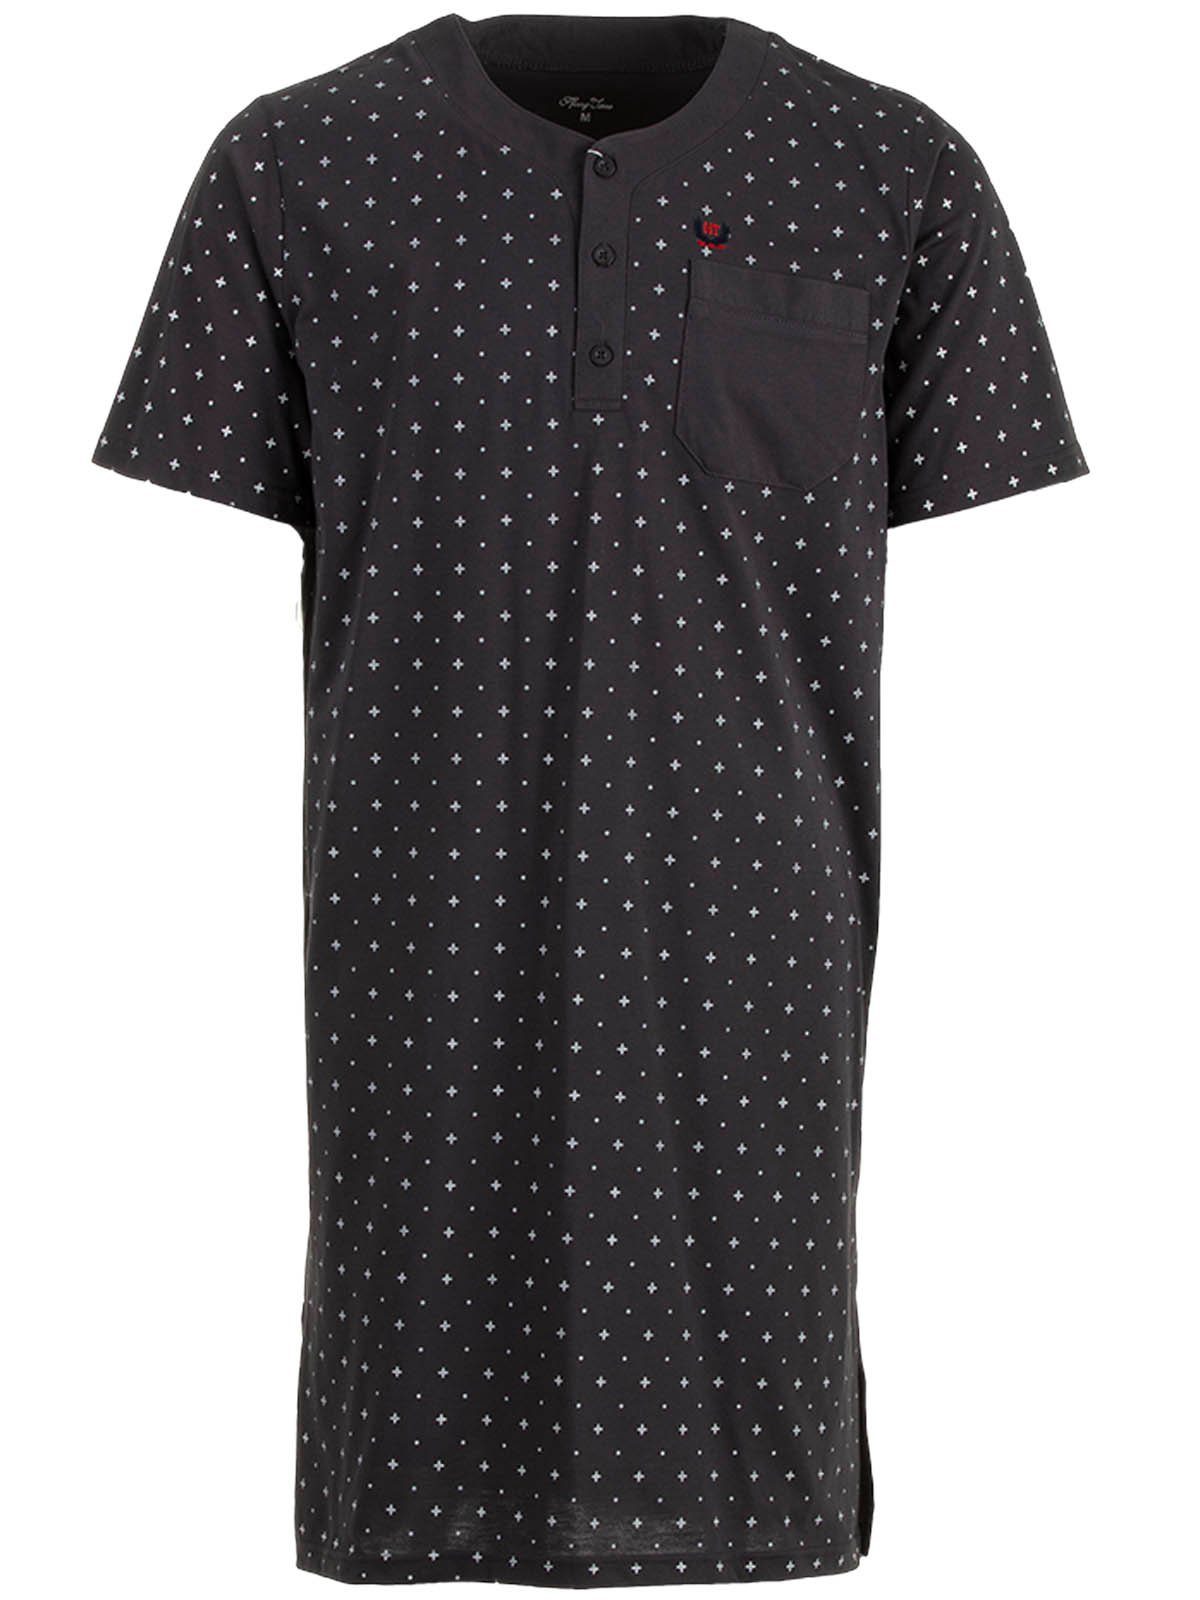 Henry Terre Nachthemd Nachthemd Kurzarm - Punkte anthrazit Kreuz